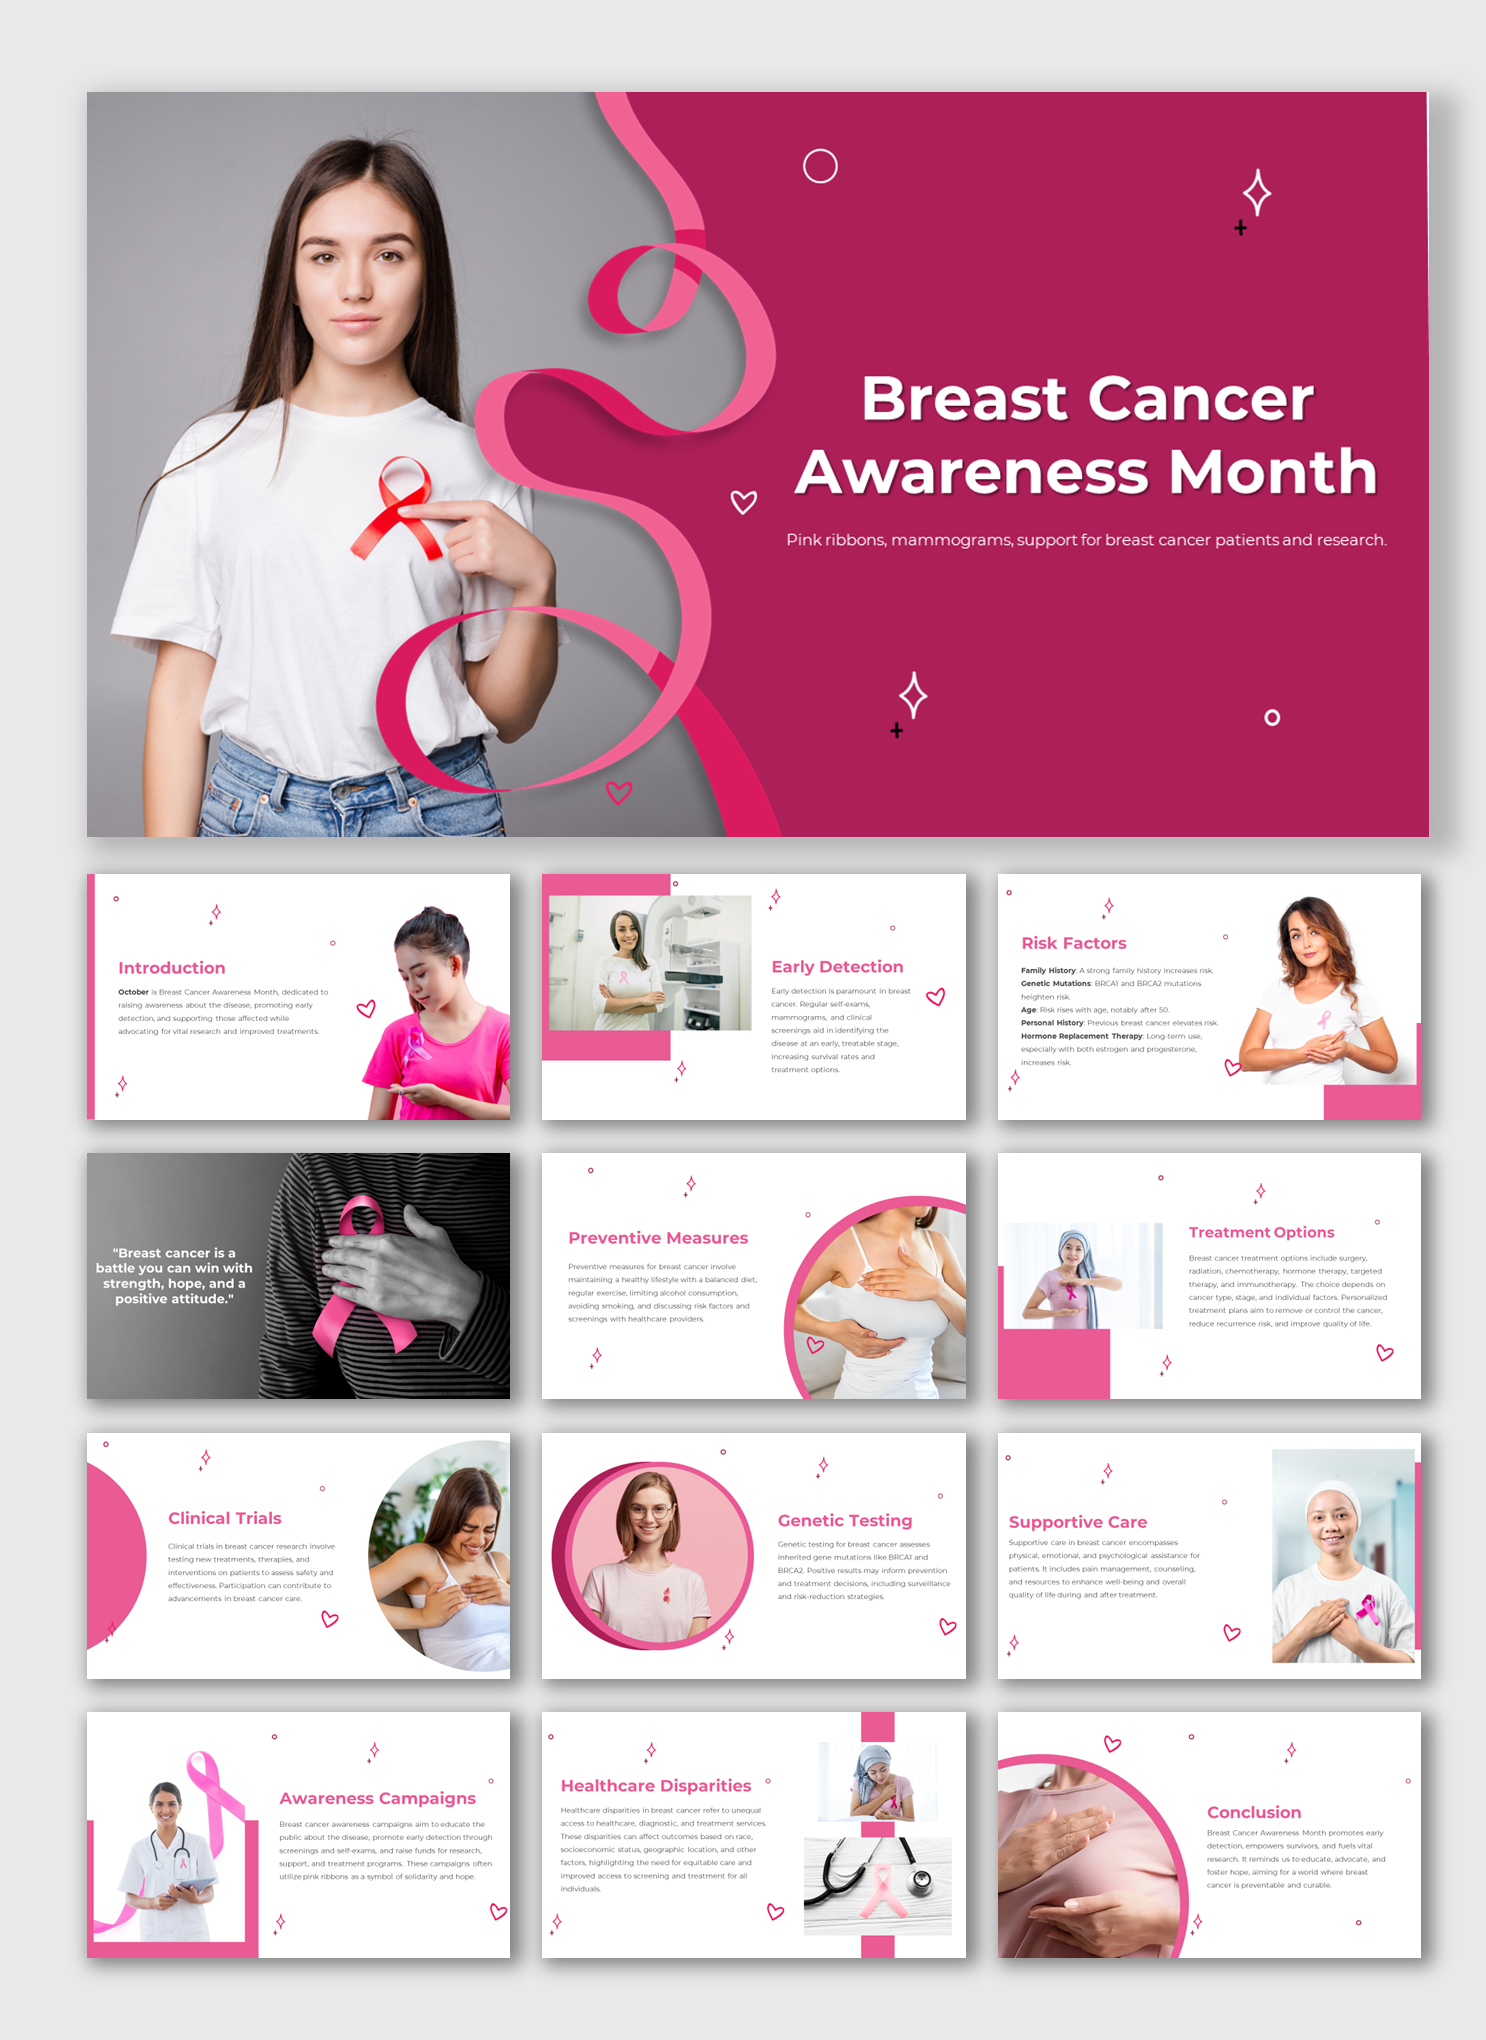 Breast Cancer Awareness Month, Description, Prevention, & History